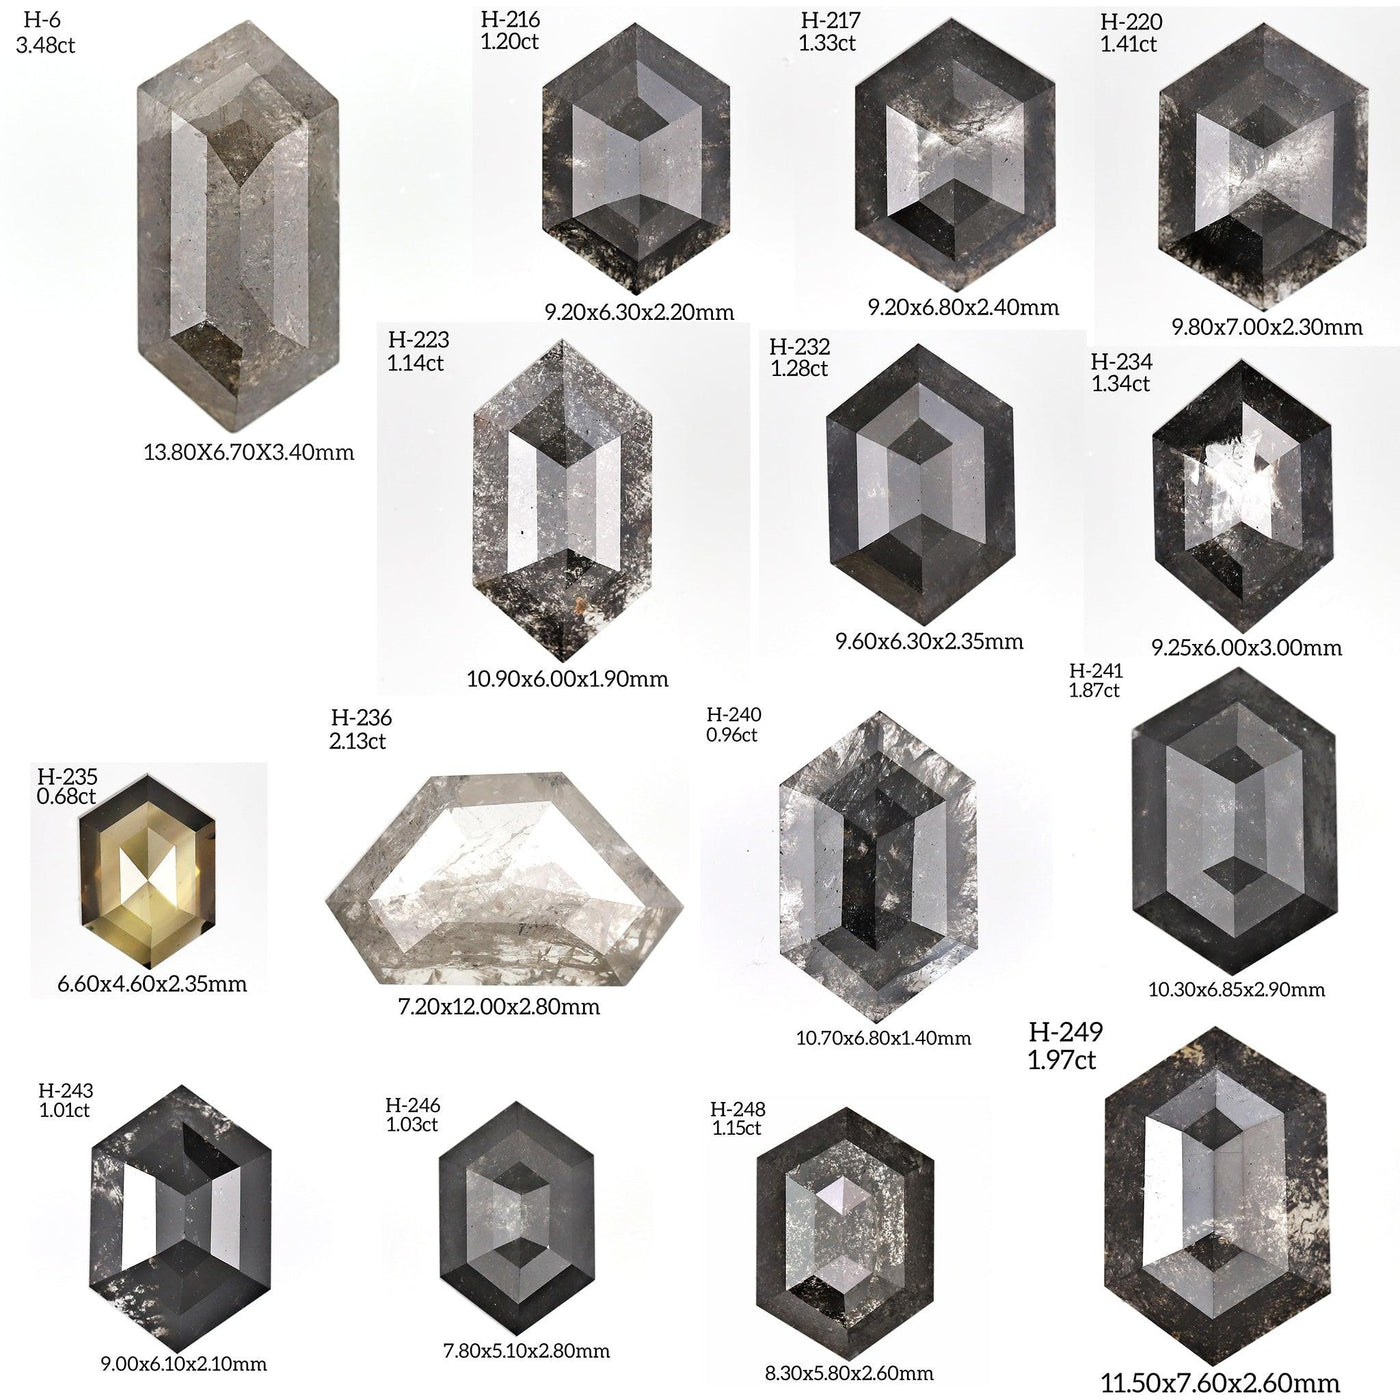 H261 - Salt and pepper hexagon diamond - Rubysta